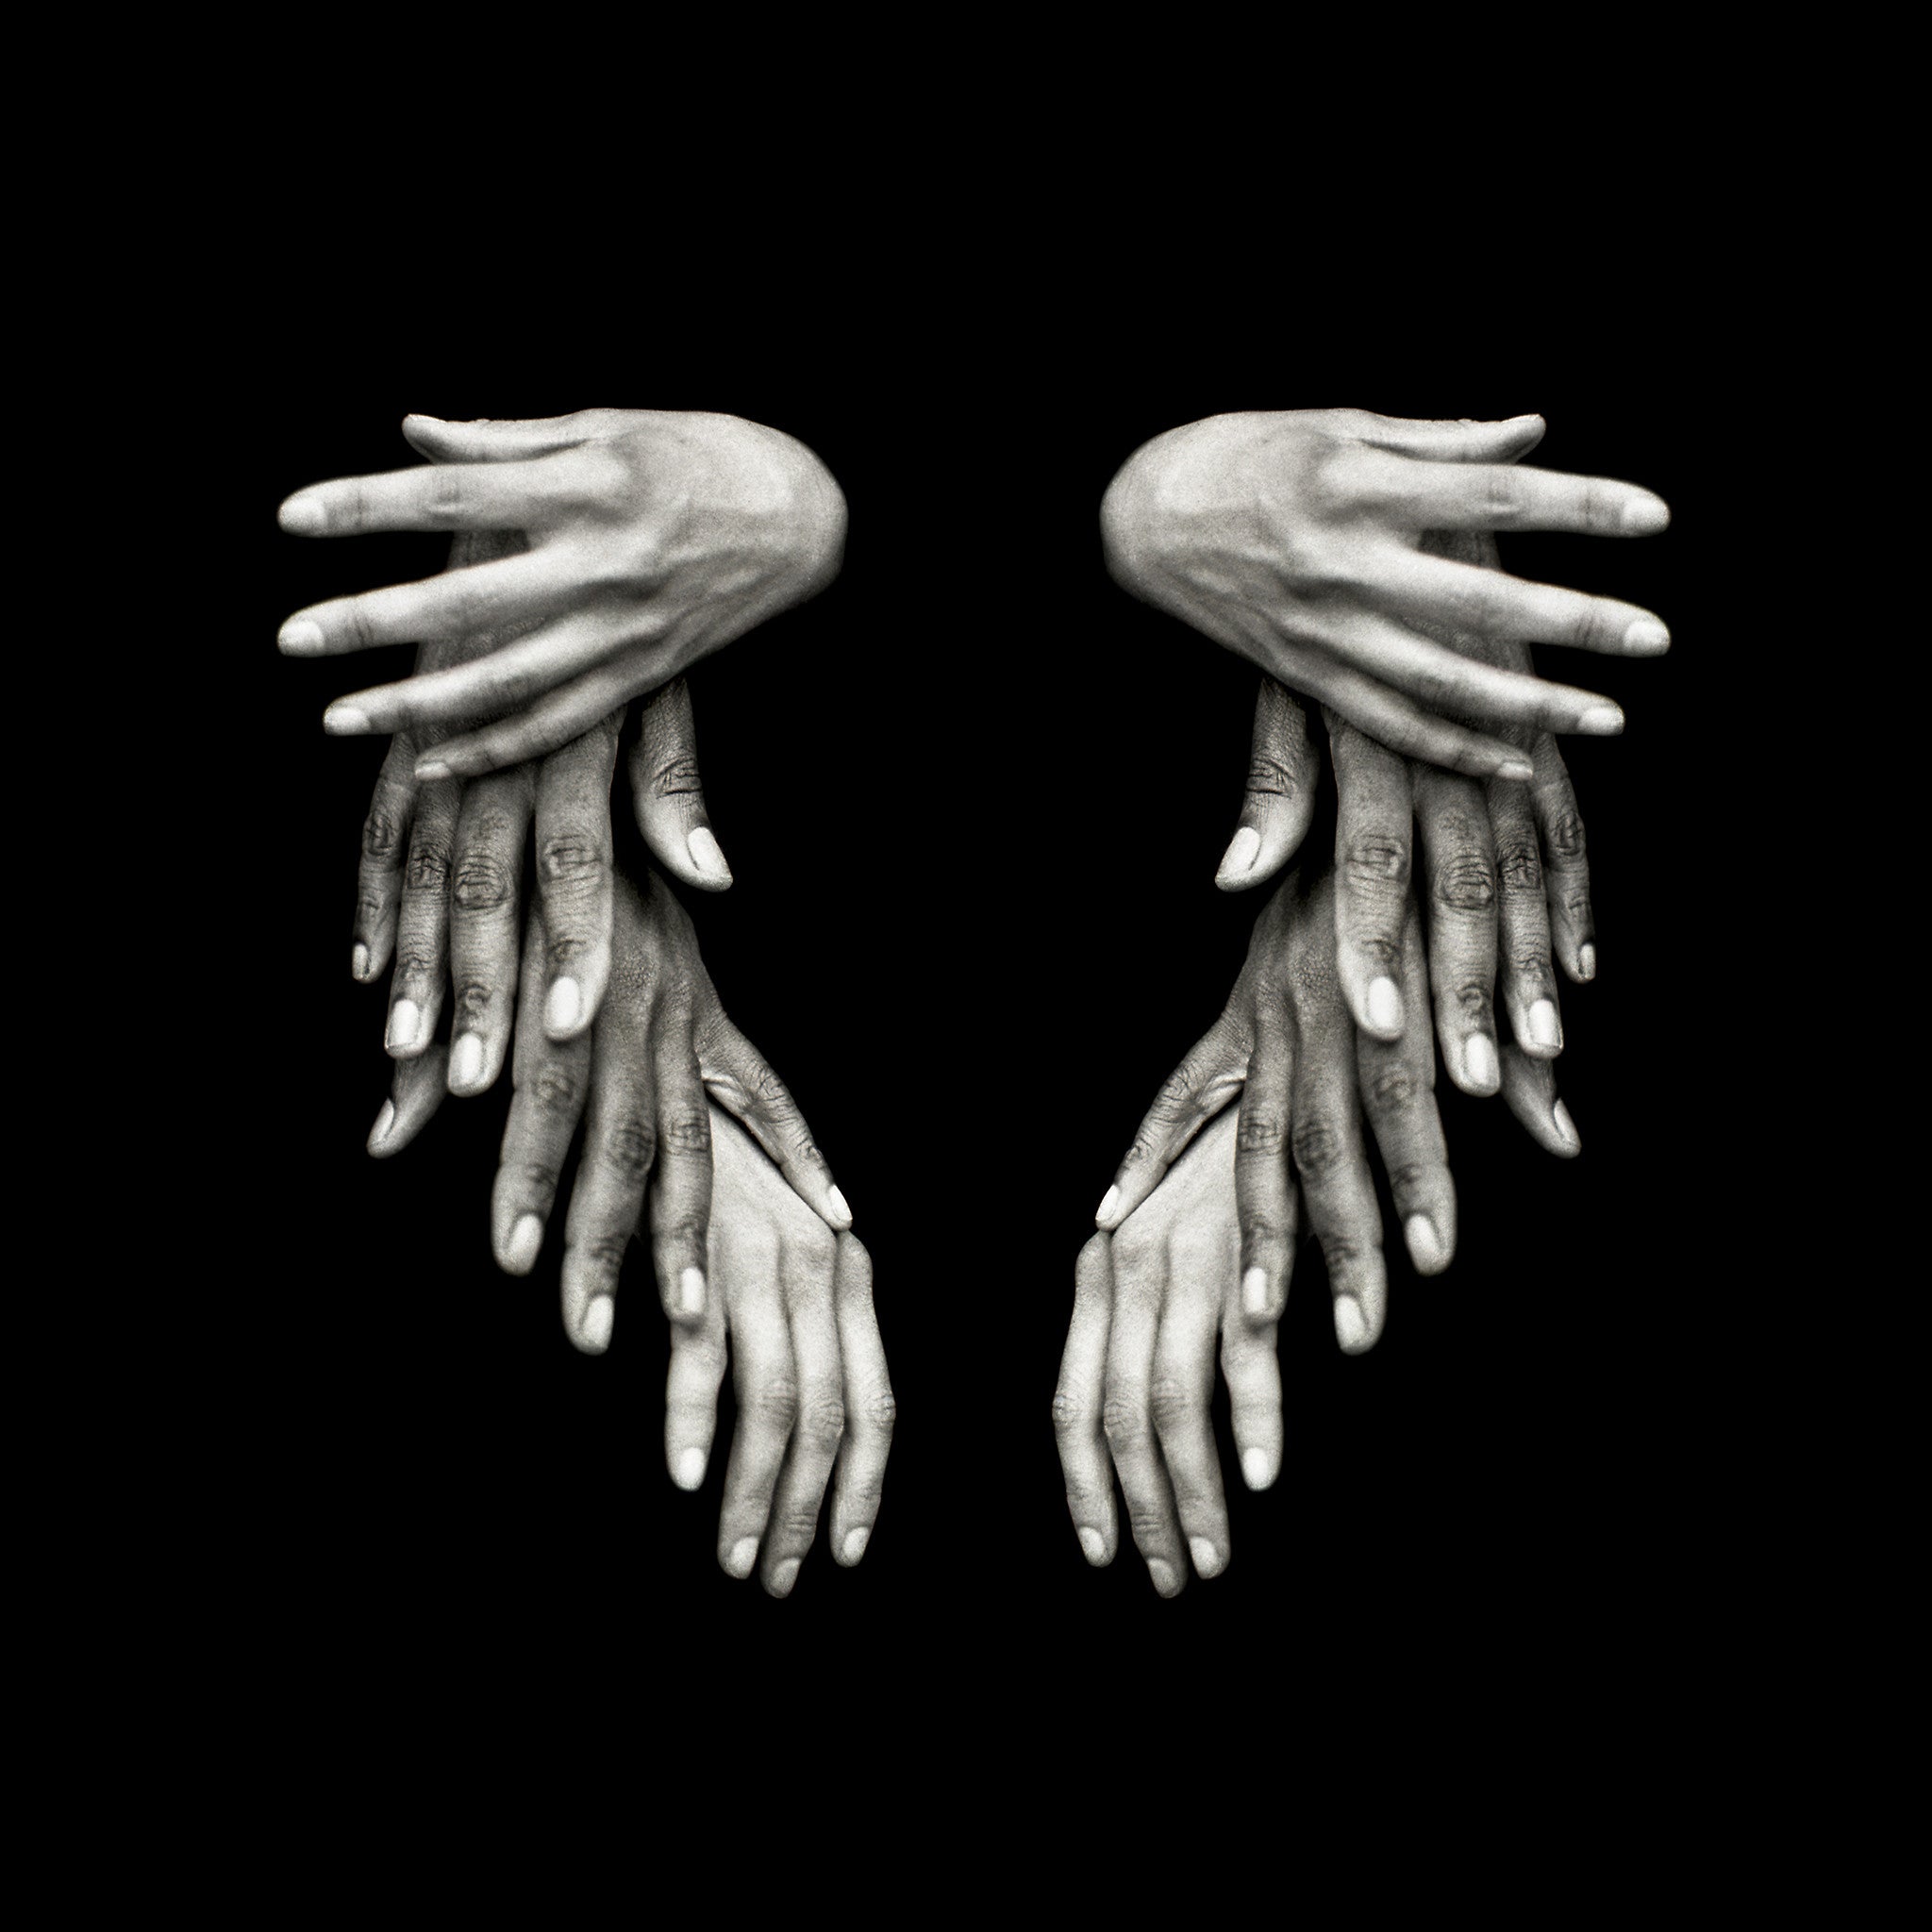 8 hands, mirroring, symmetry, black and white, black background, art print.